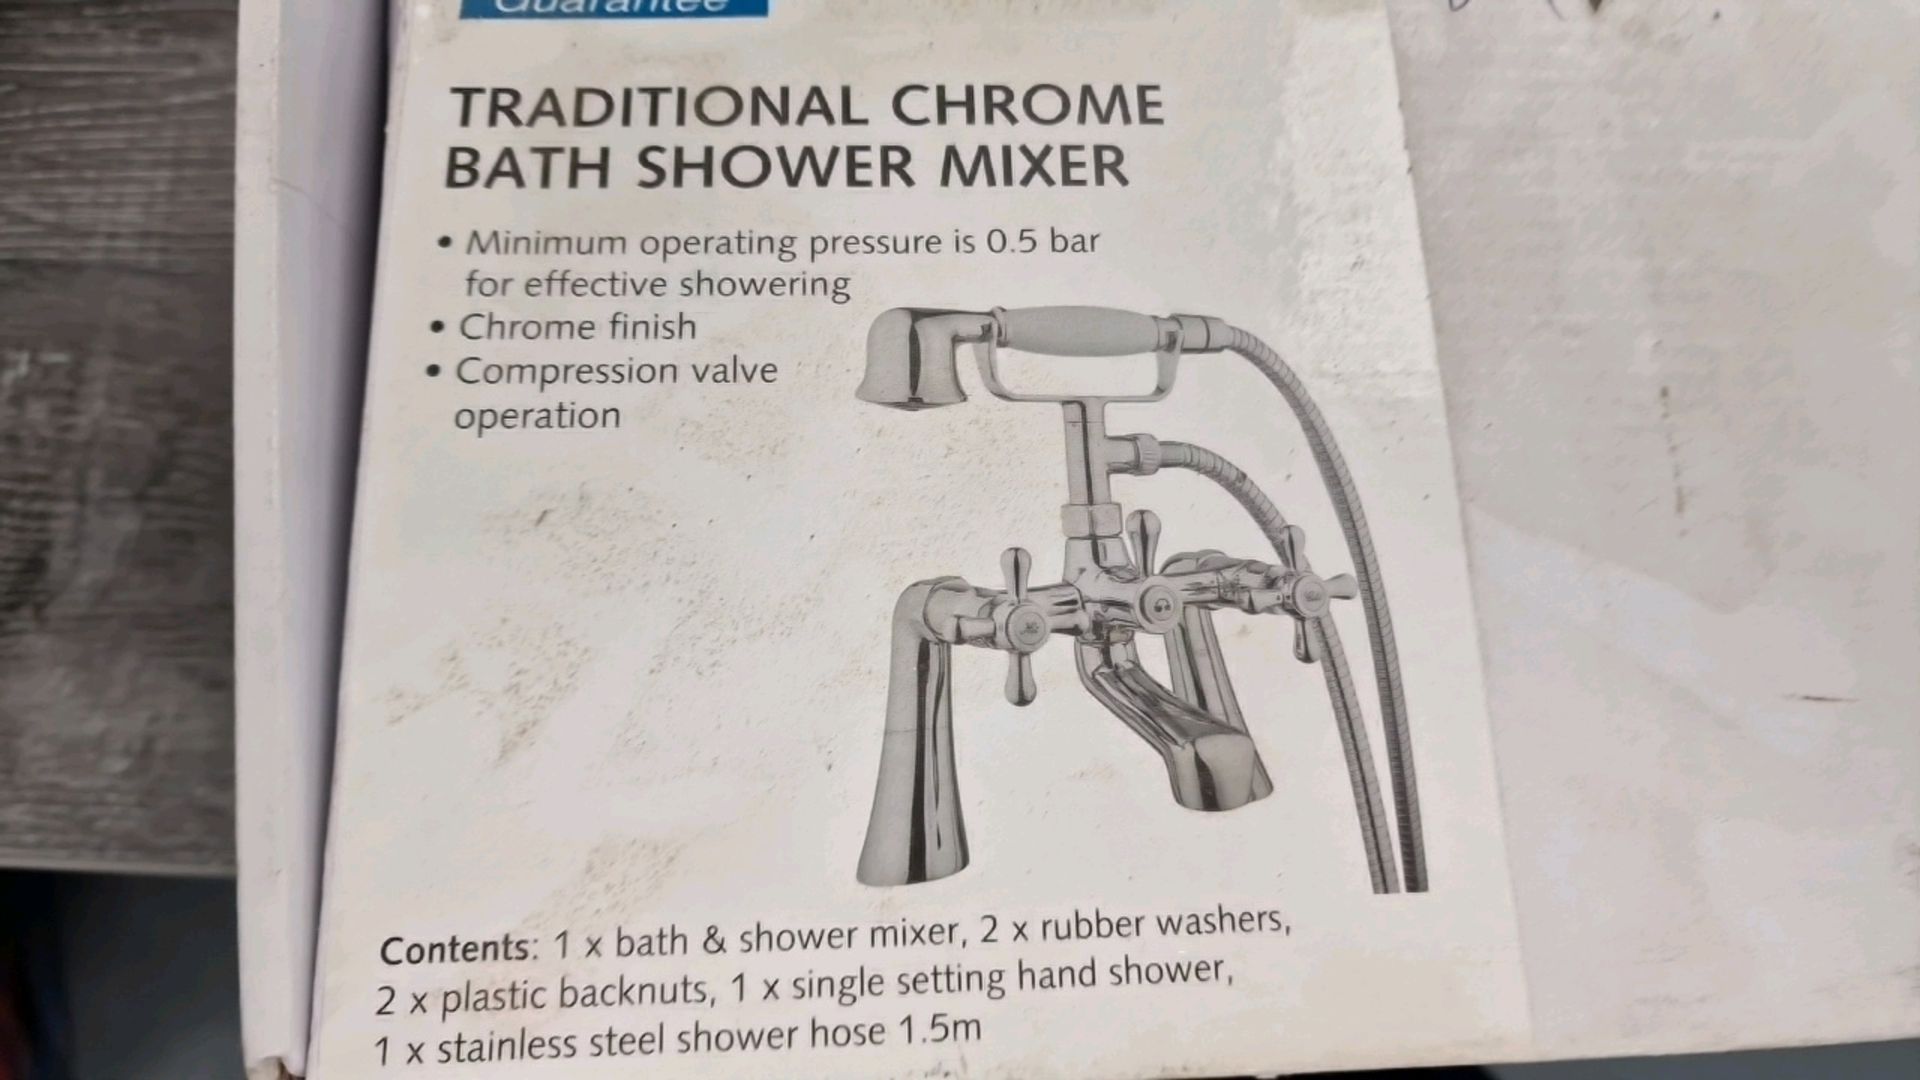 Swirl Bath Shower Mixer - Image 3 of 4